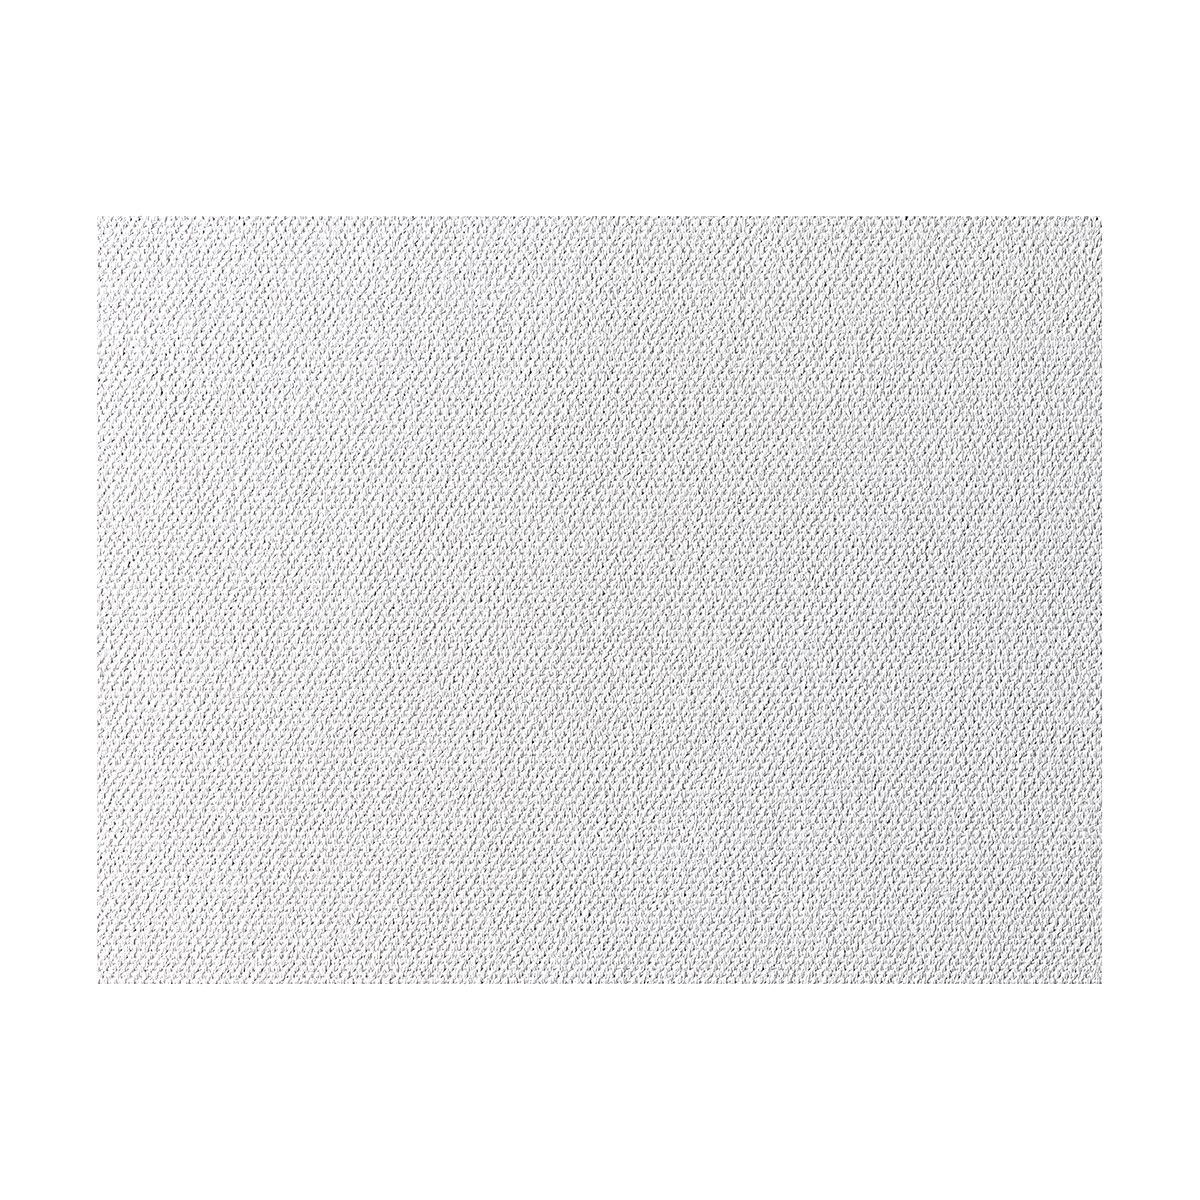 Canvas Pad, 9 x 12, 10 Sheets